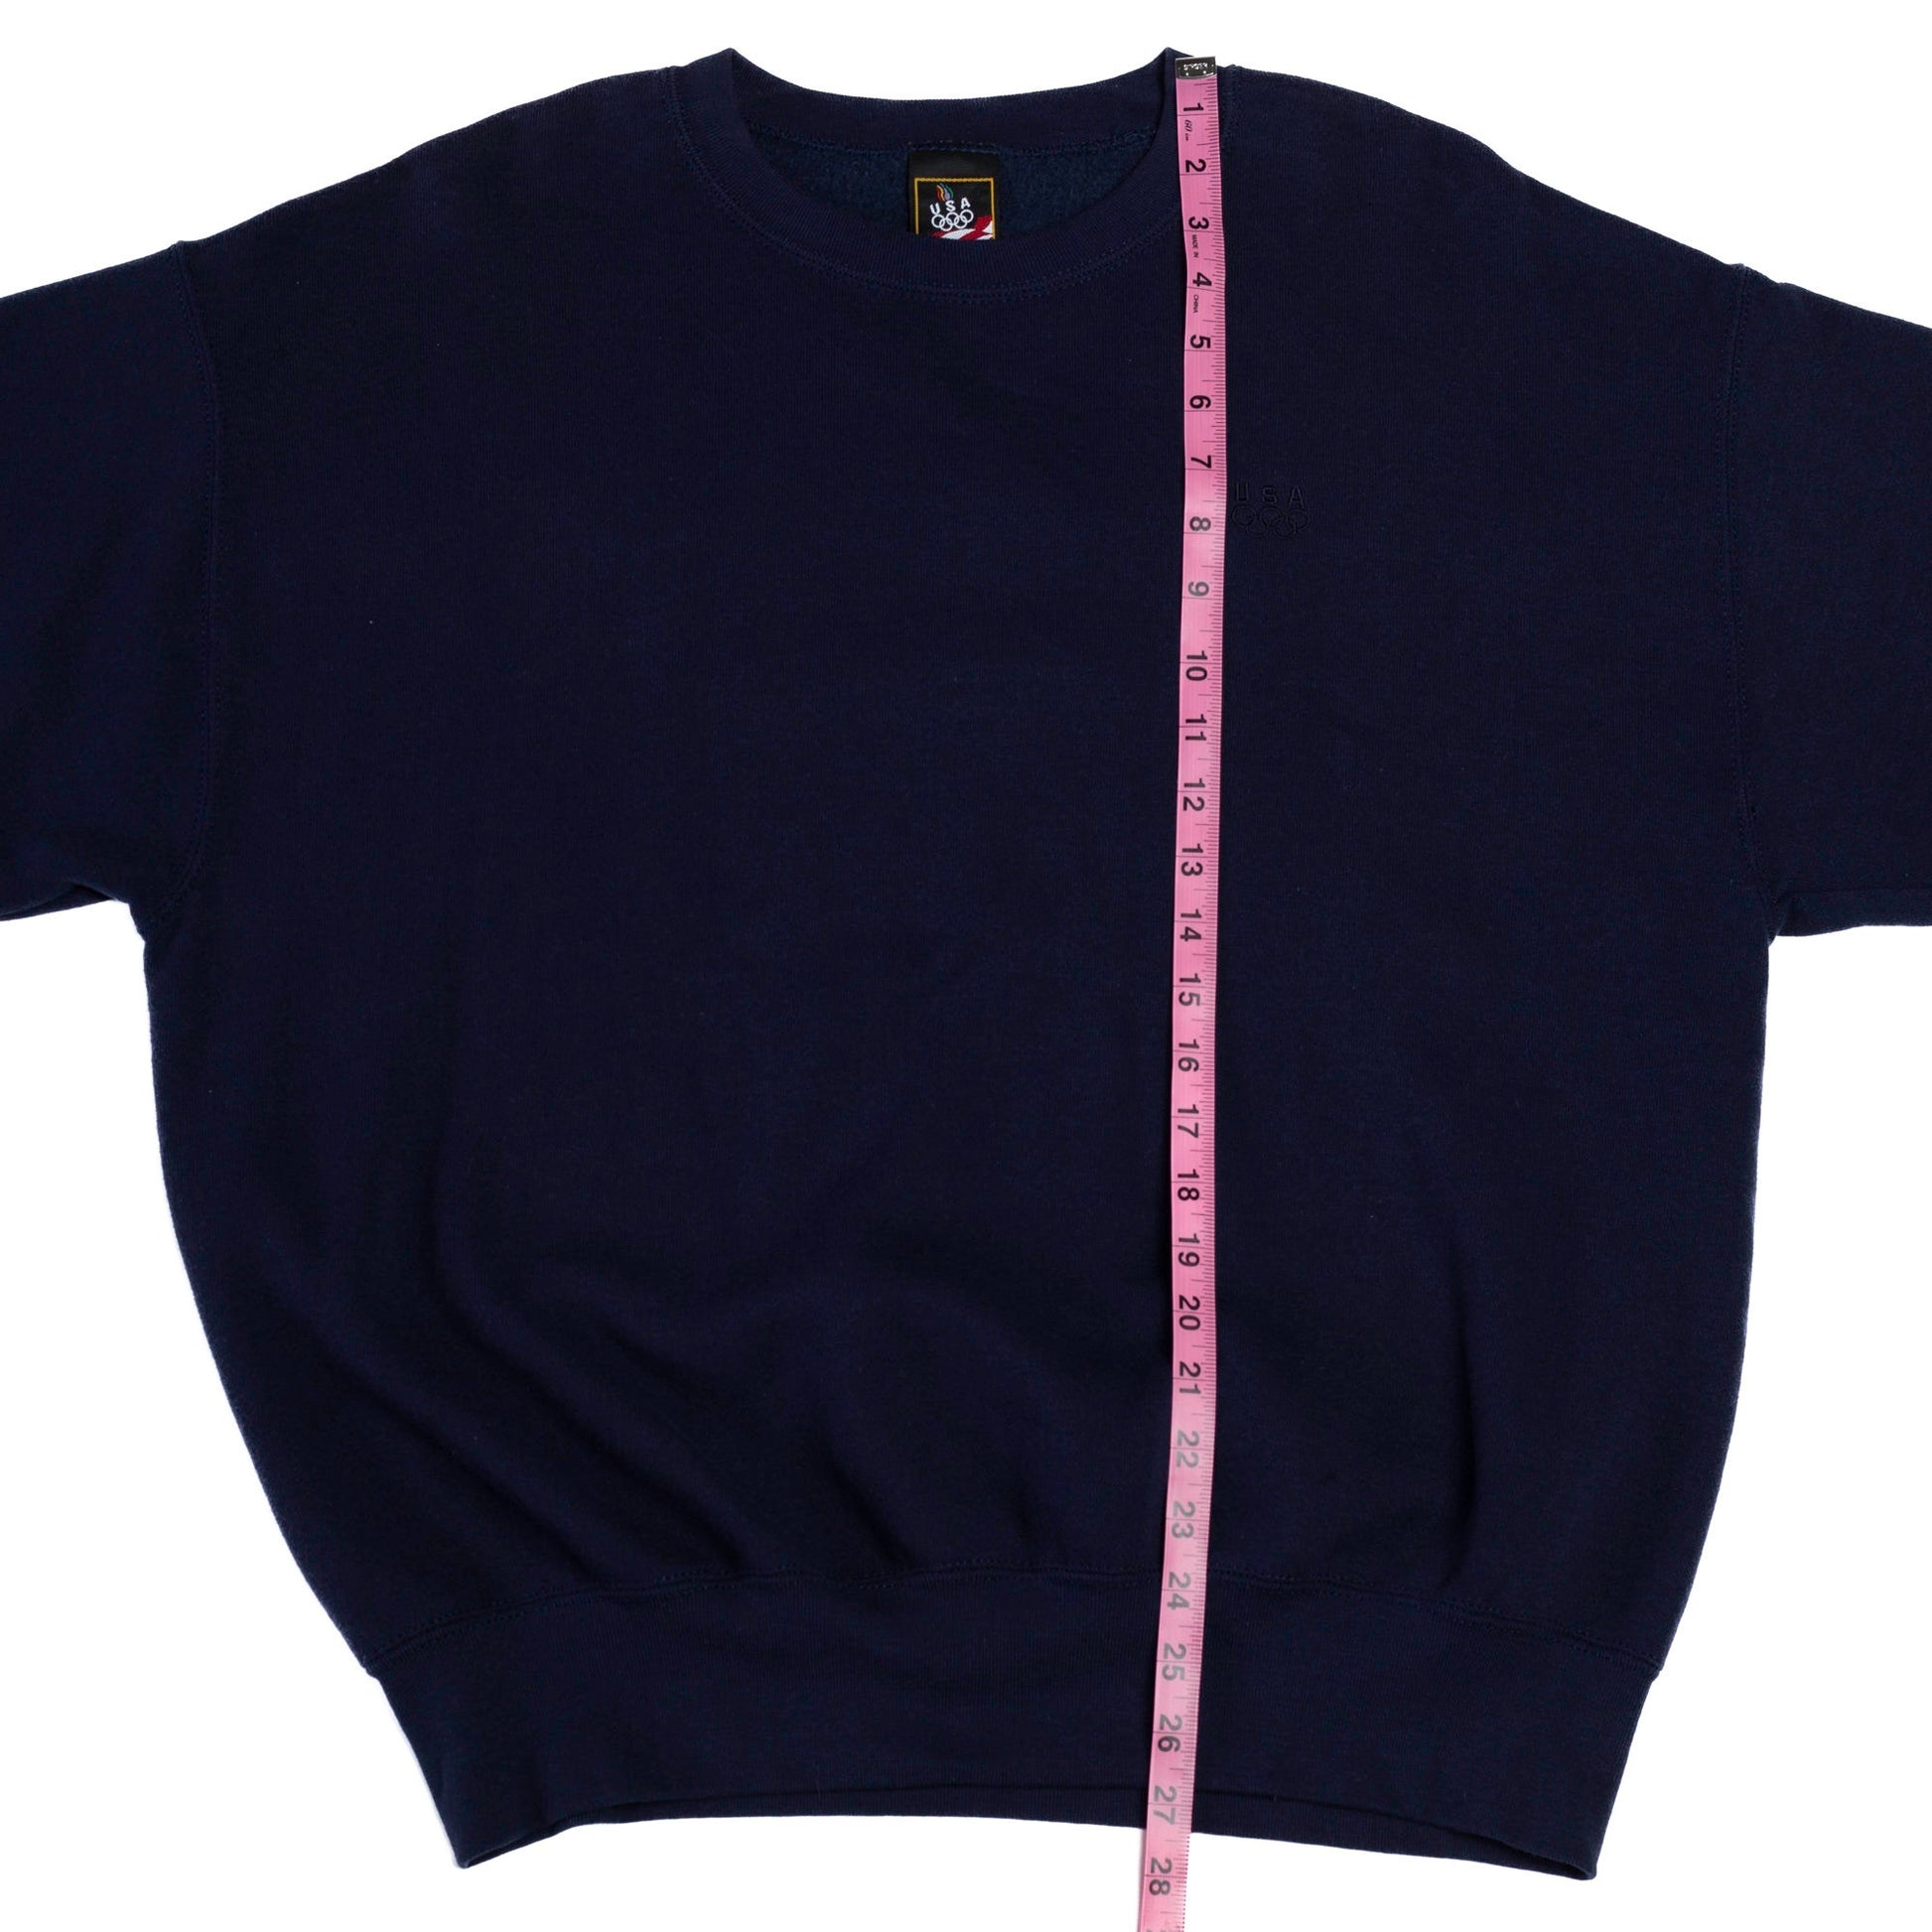 90s USA Olympics Sweatshirt - Men's Large, Women's XL | Vintage Navy Blue Crew Neck Pullover